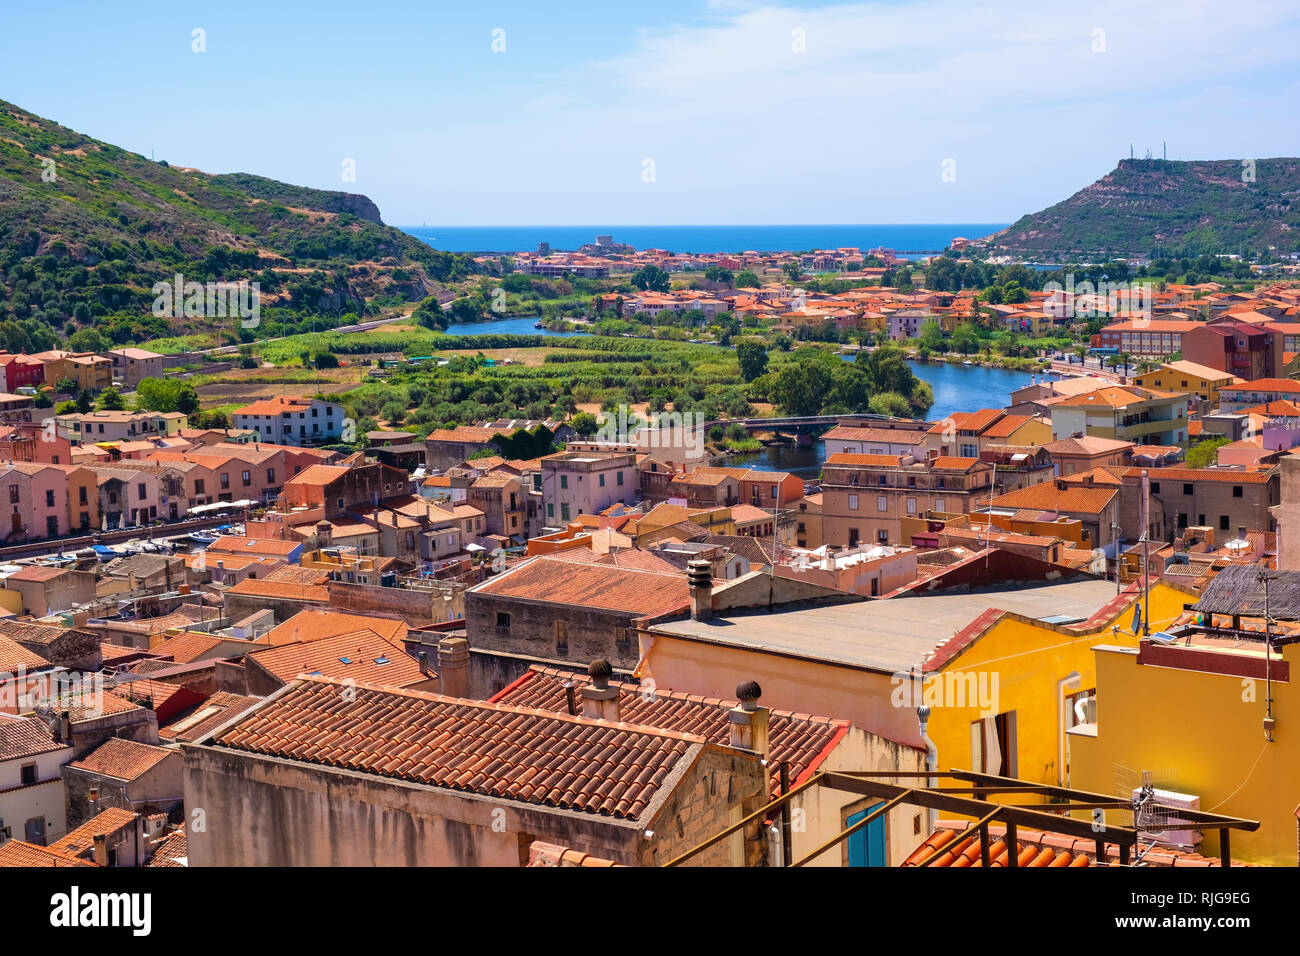 Bosa, Sardinia / Italy - 2018/08/13: Panoramic view of the town of Bosa by the Temo river with Bosa Marina resort at the Mediterranean sea coast Stock Photo